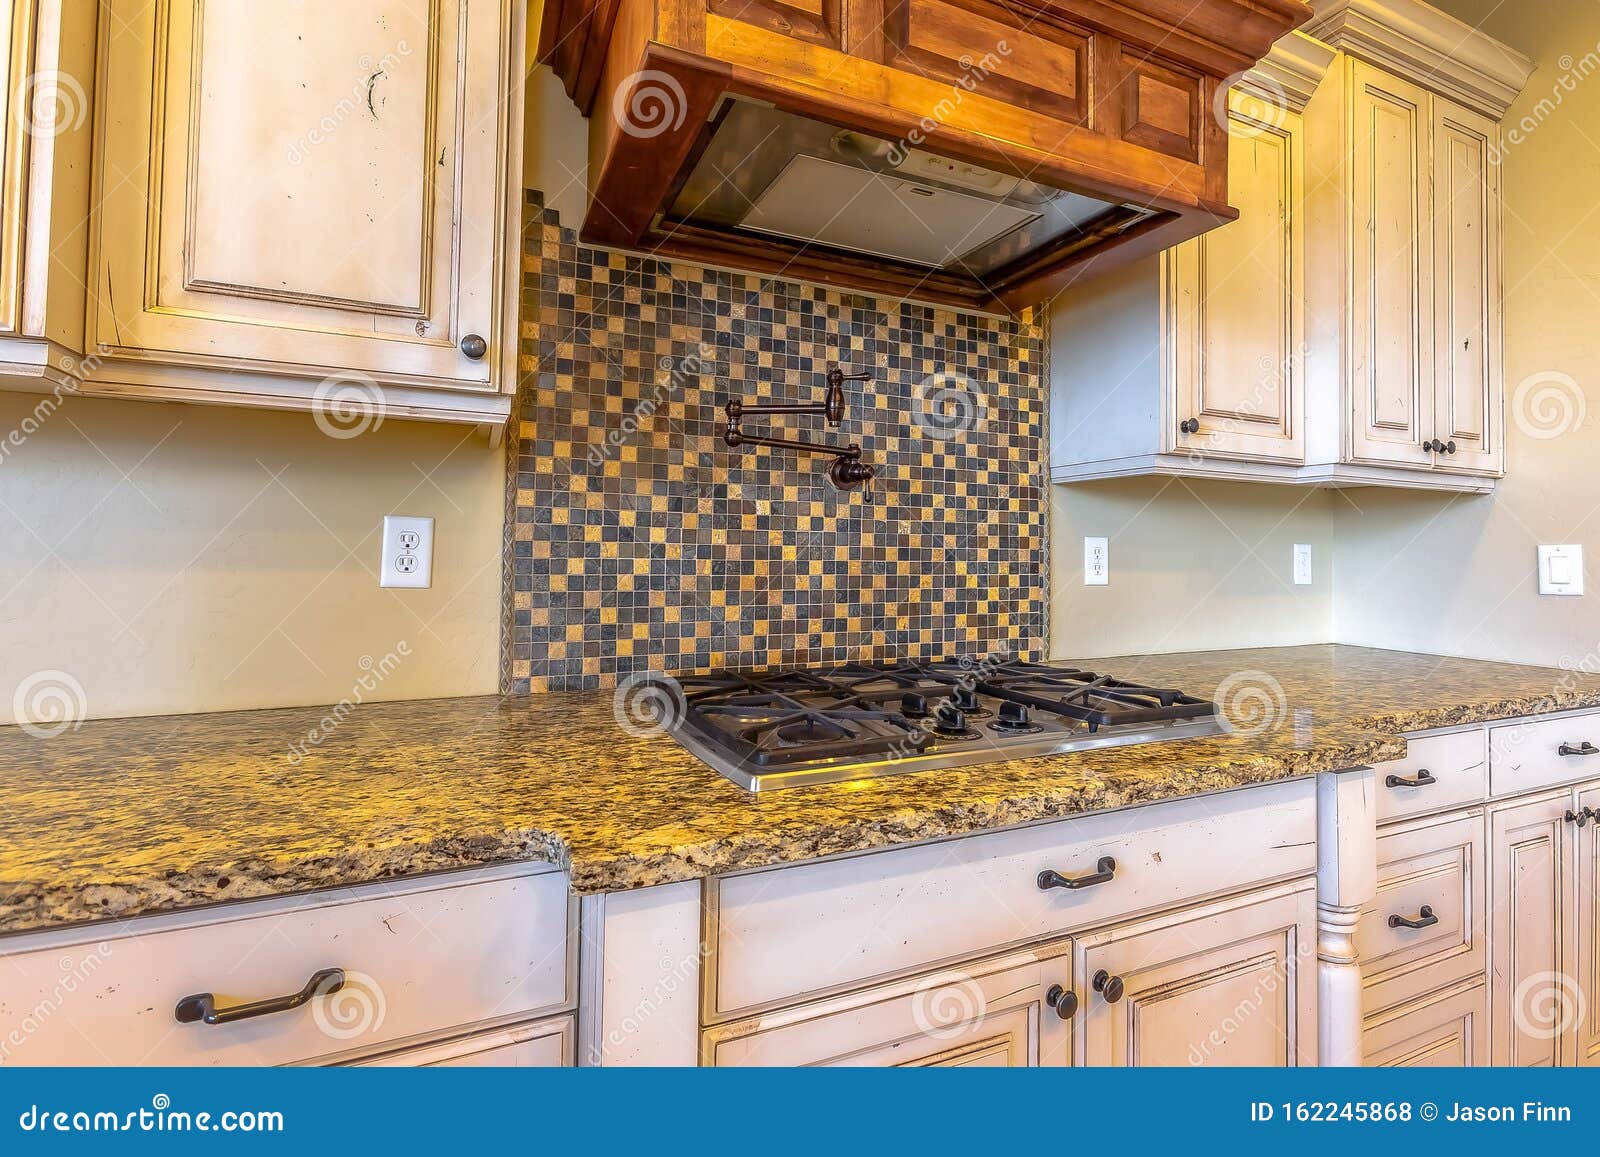 Granite Kitchen Counter With Hob And Splash Back Stock Photo